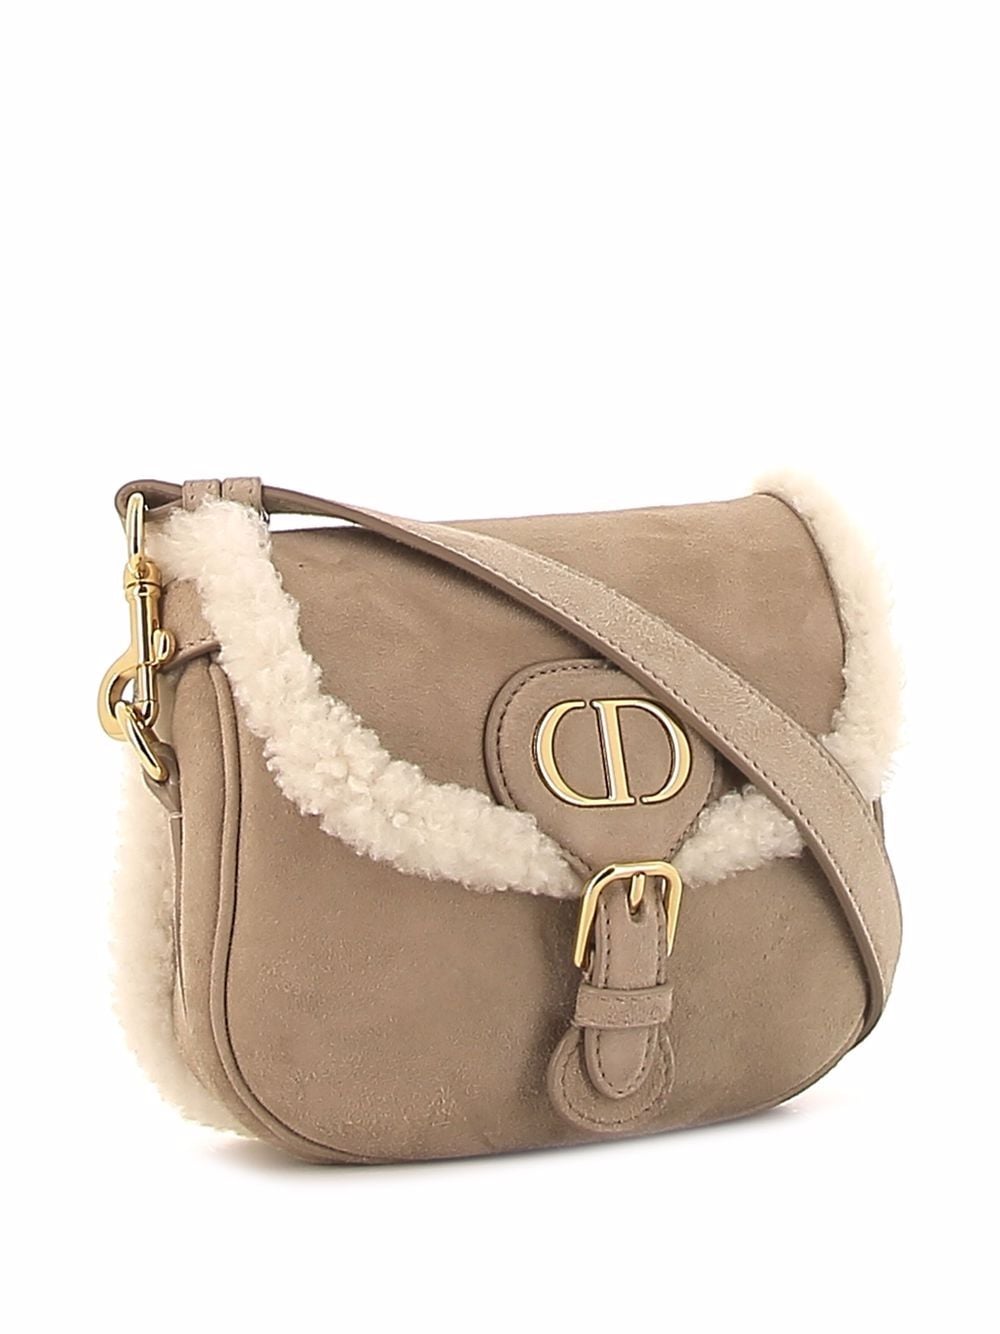 Christian Dior 2020 Small Shearling Bobby Crossbody Bag - Neutrals Crossbody  Bags, Handbags - CHR264642